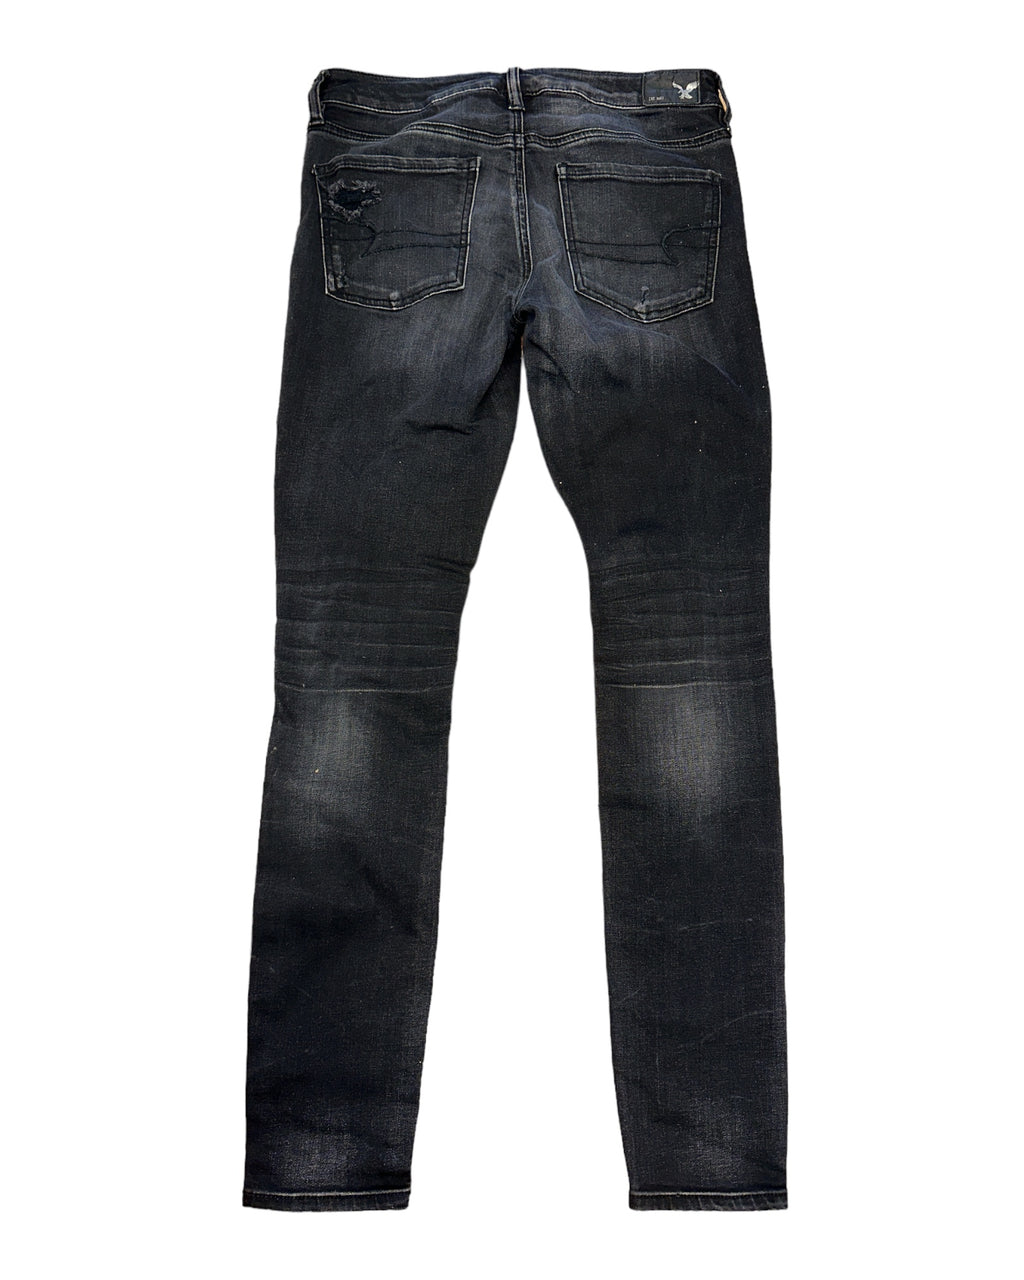 Black American Eagle Distressed Skinny Jeans, 6